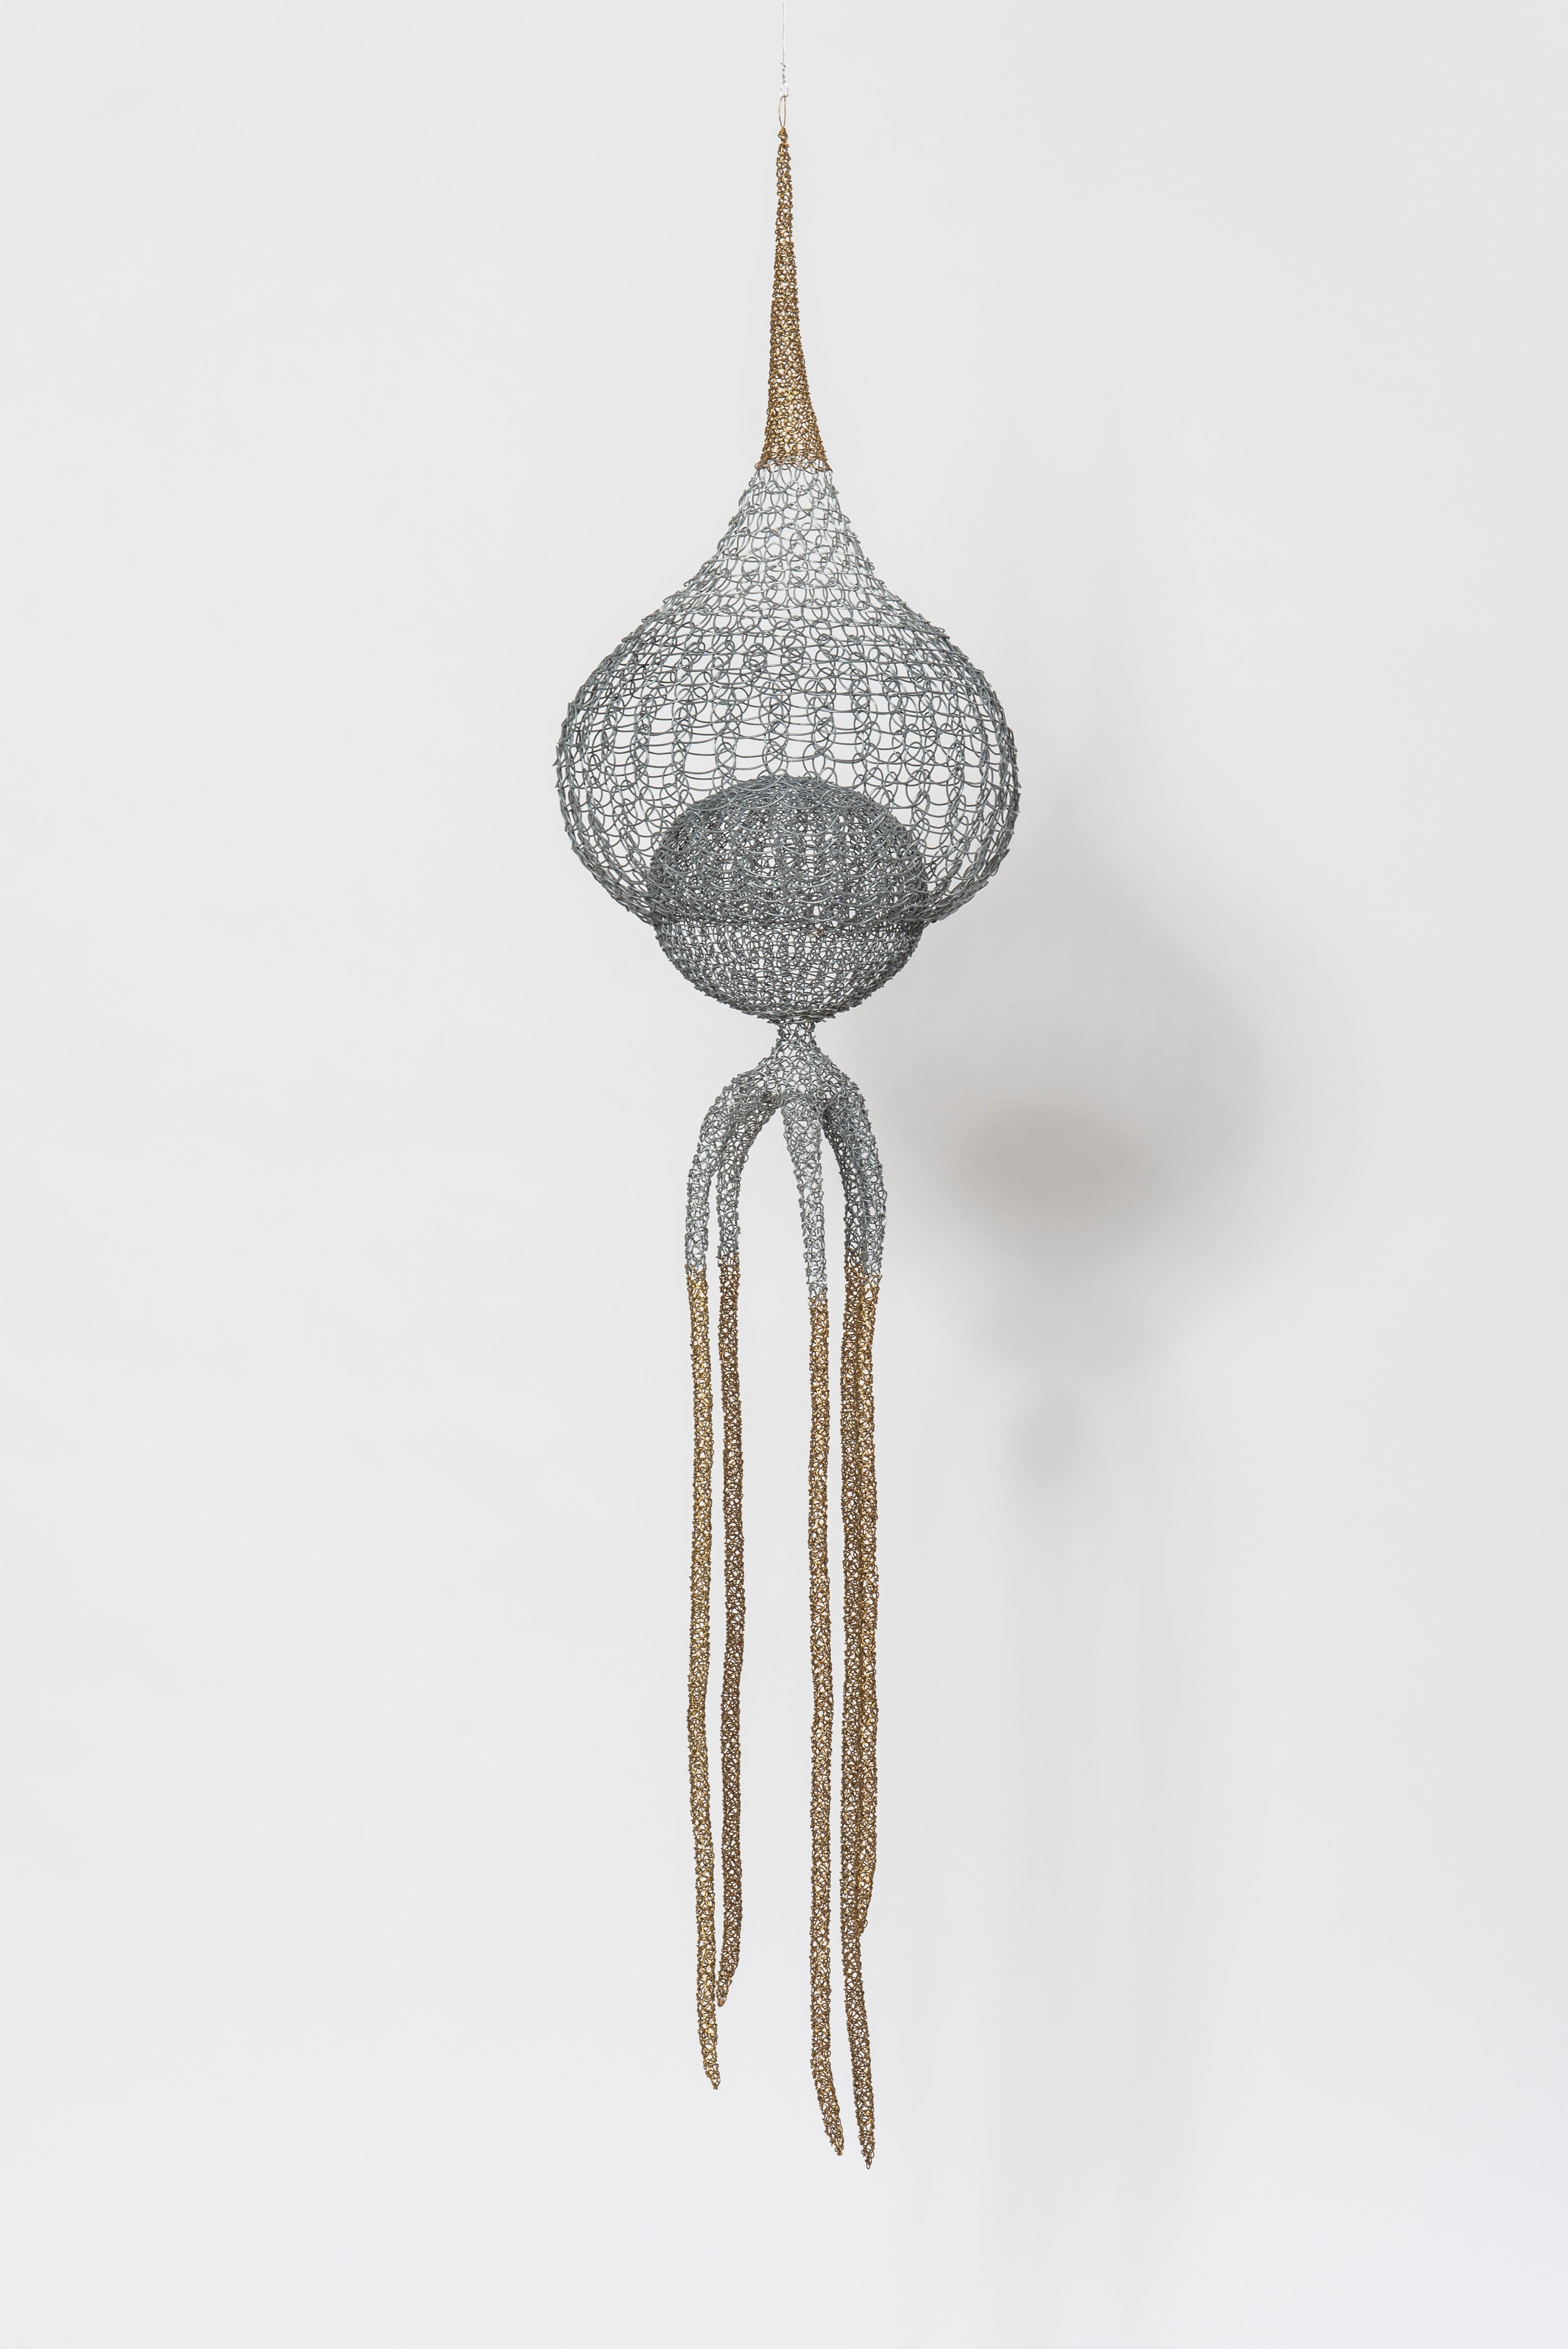 Delphine Grandvaux Abstract Sculpture - "Octopus II", Hand Knitted Transparent Golden Grey Metallic Wire Sculpture 